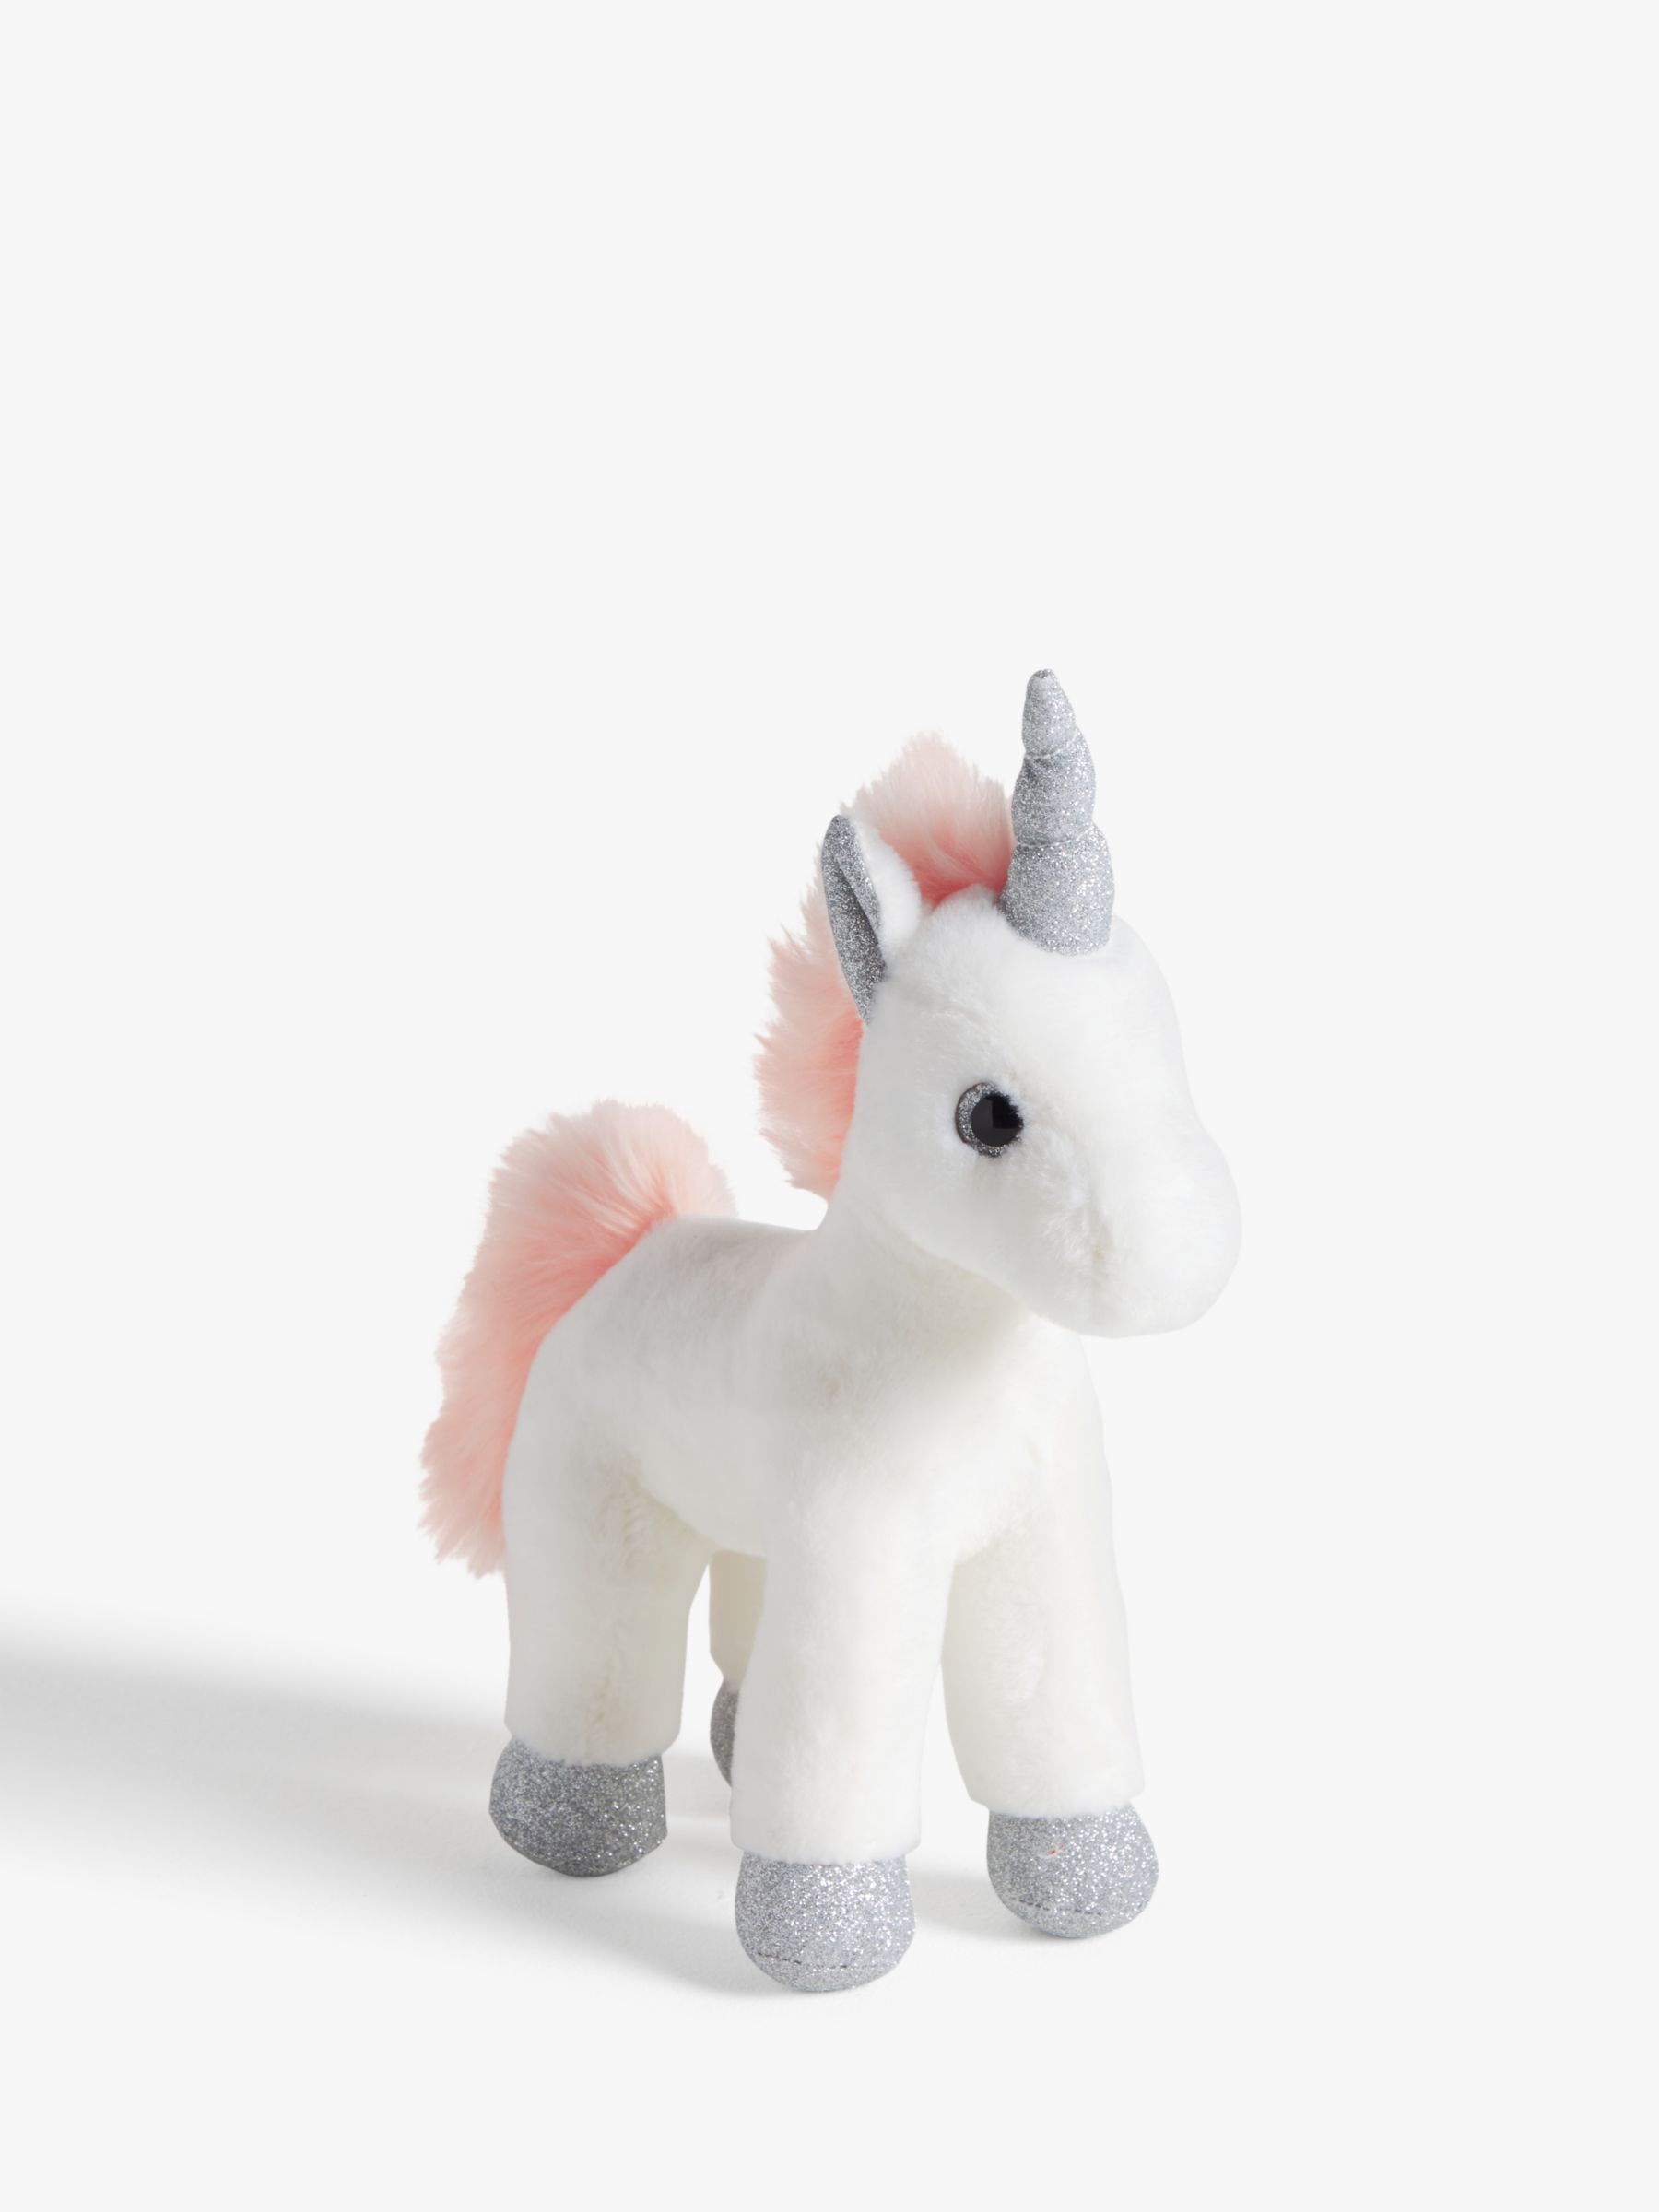 cuddly toy unicorn